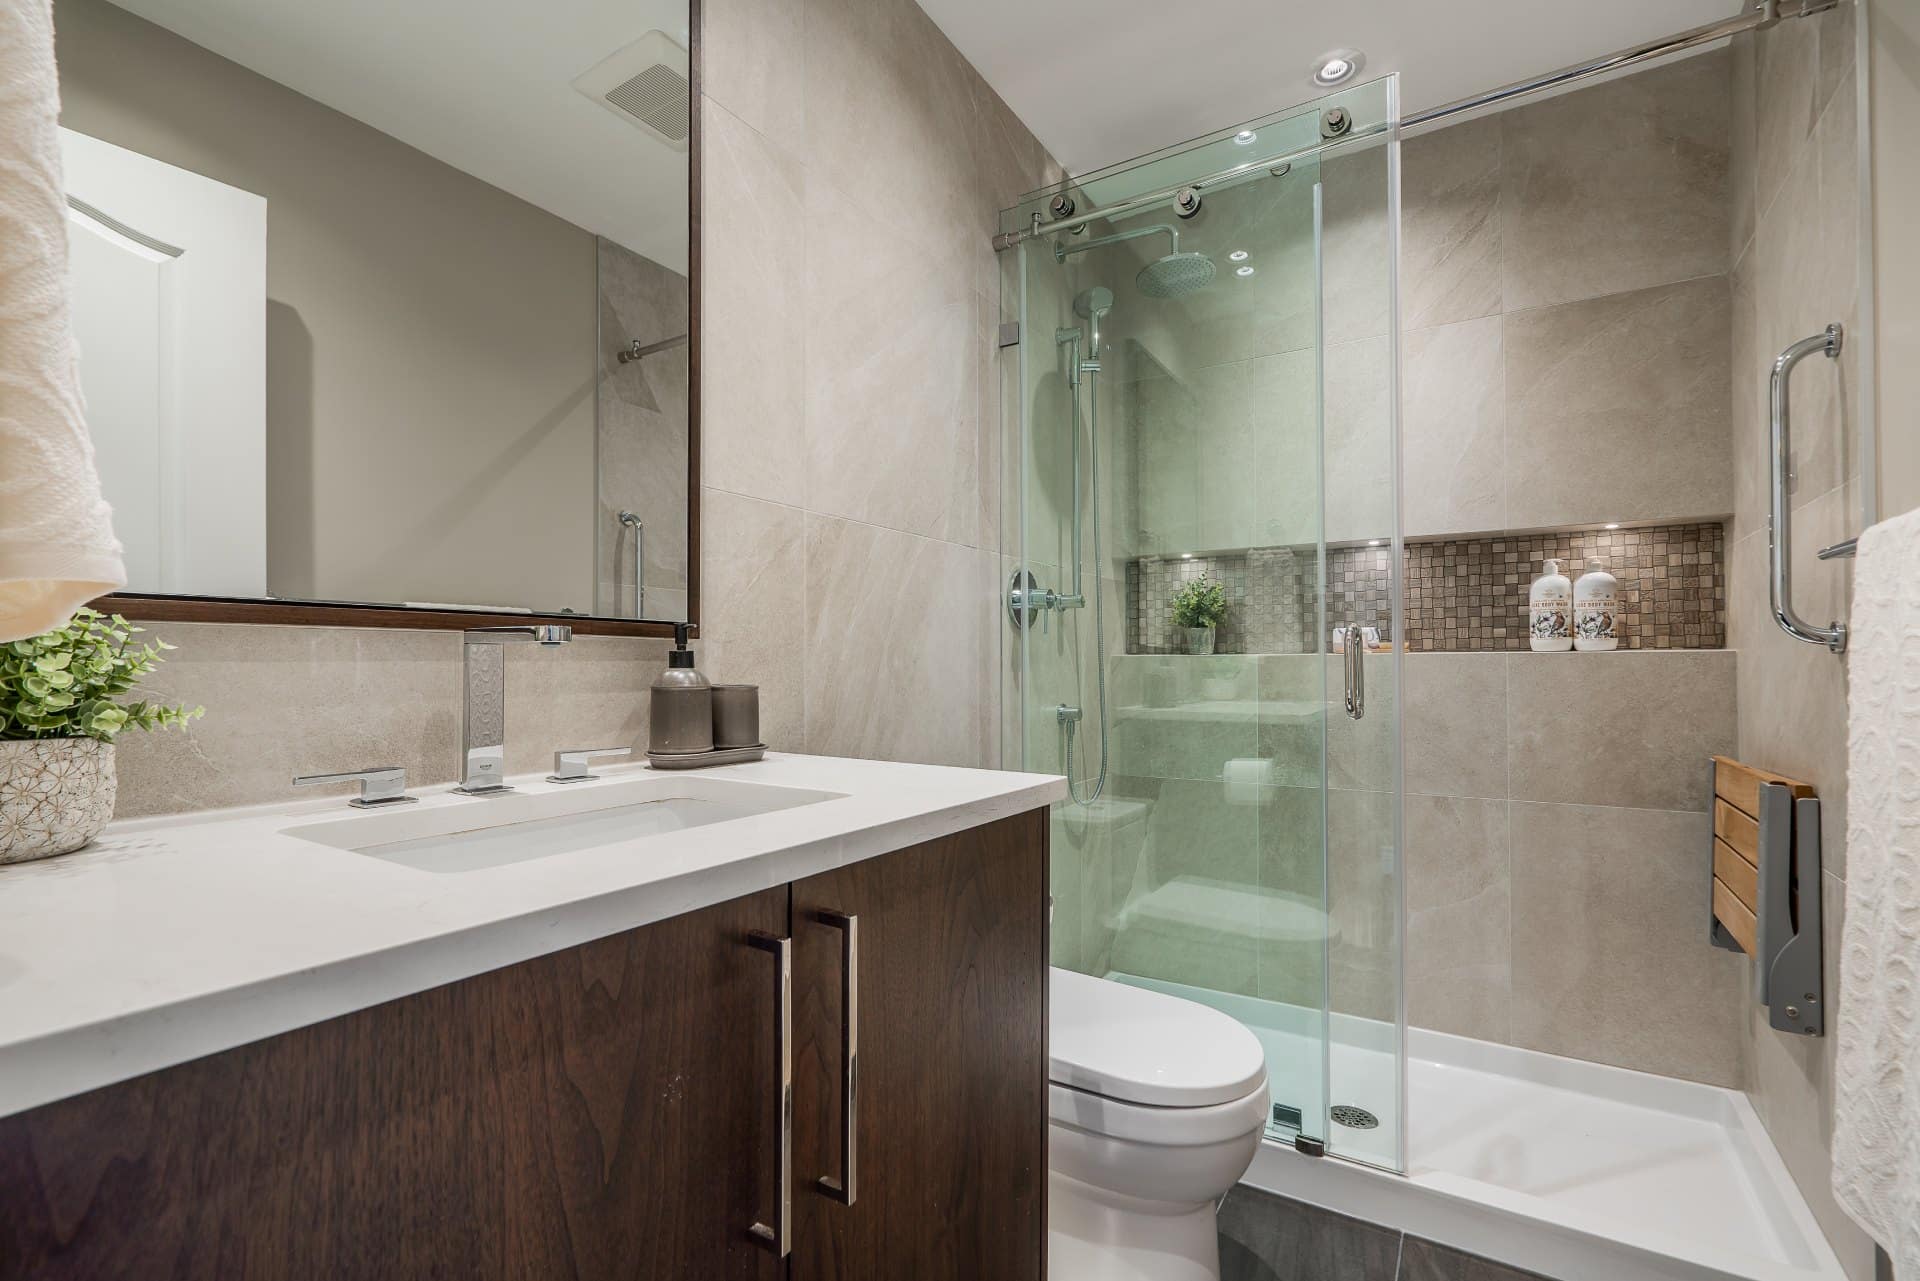 Bathroom-interior-design-built-in-medicine-cabinet-glass-shower